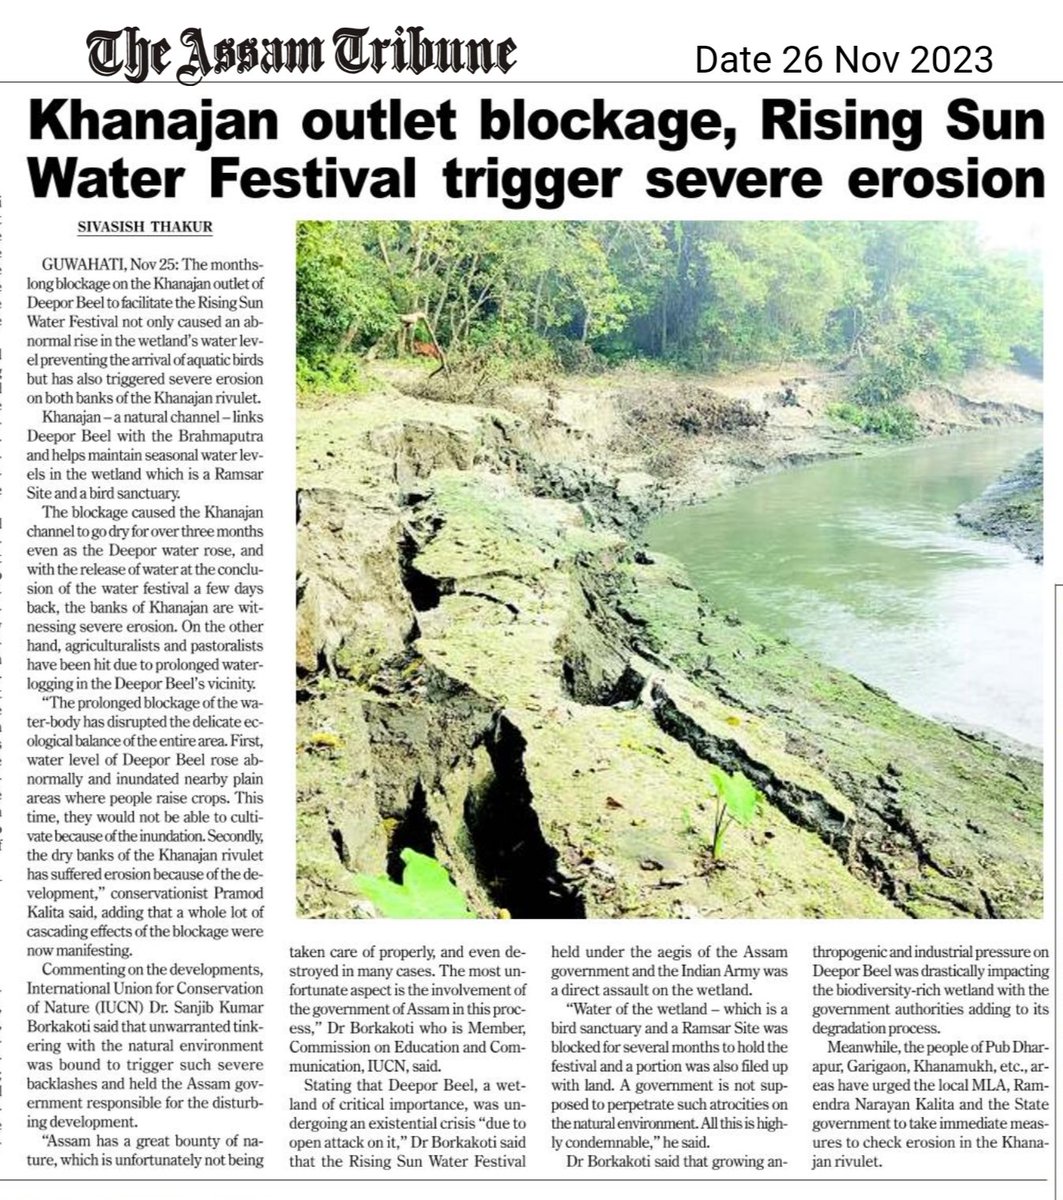 Khanajan outlet blockage, Rising Sun Water Festival trigger severe erosion: The Assam Tribune.26/11/23. @RamsarConv @UNESCO